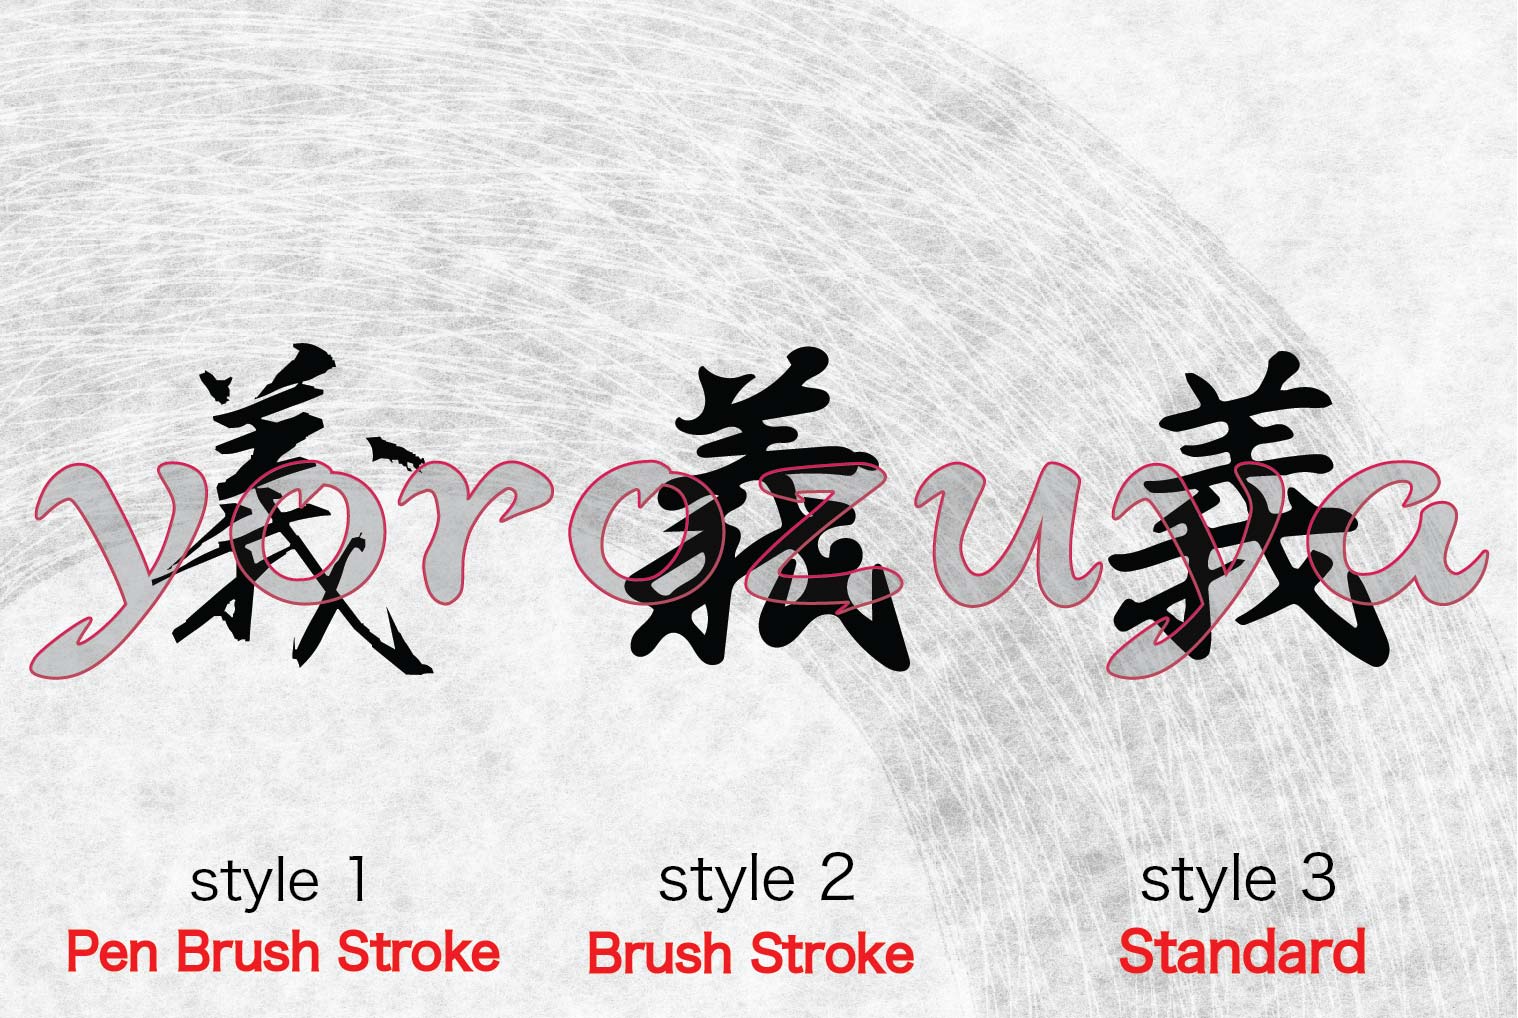 Righteous (Samurai Virtue) In Japanese Kanji Symbol For A Powerful Single  Word Tattoo For Guys – Yorozuya